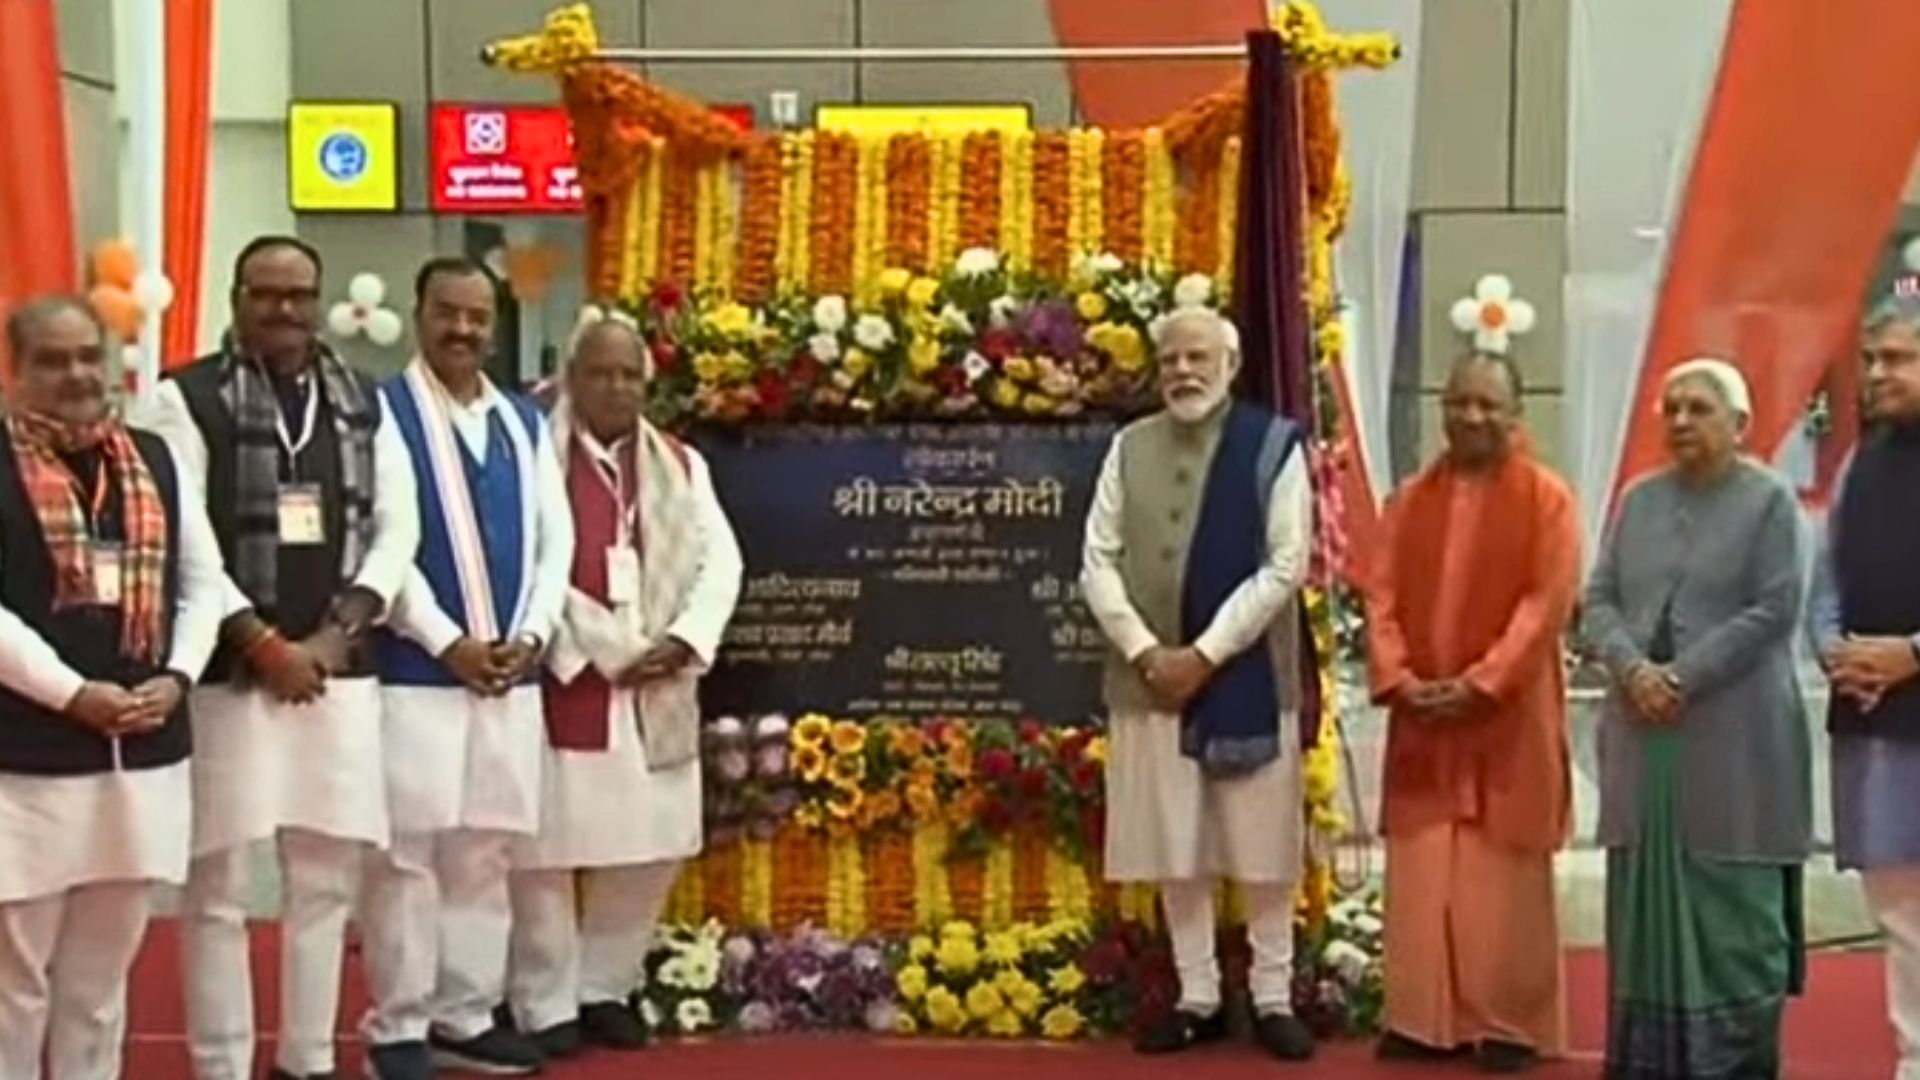 PM Modi dedicated three rail projects at Ayodhya